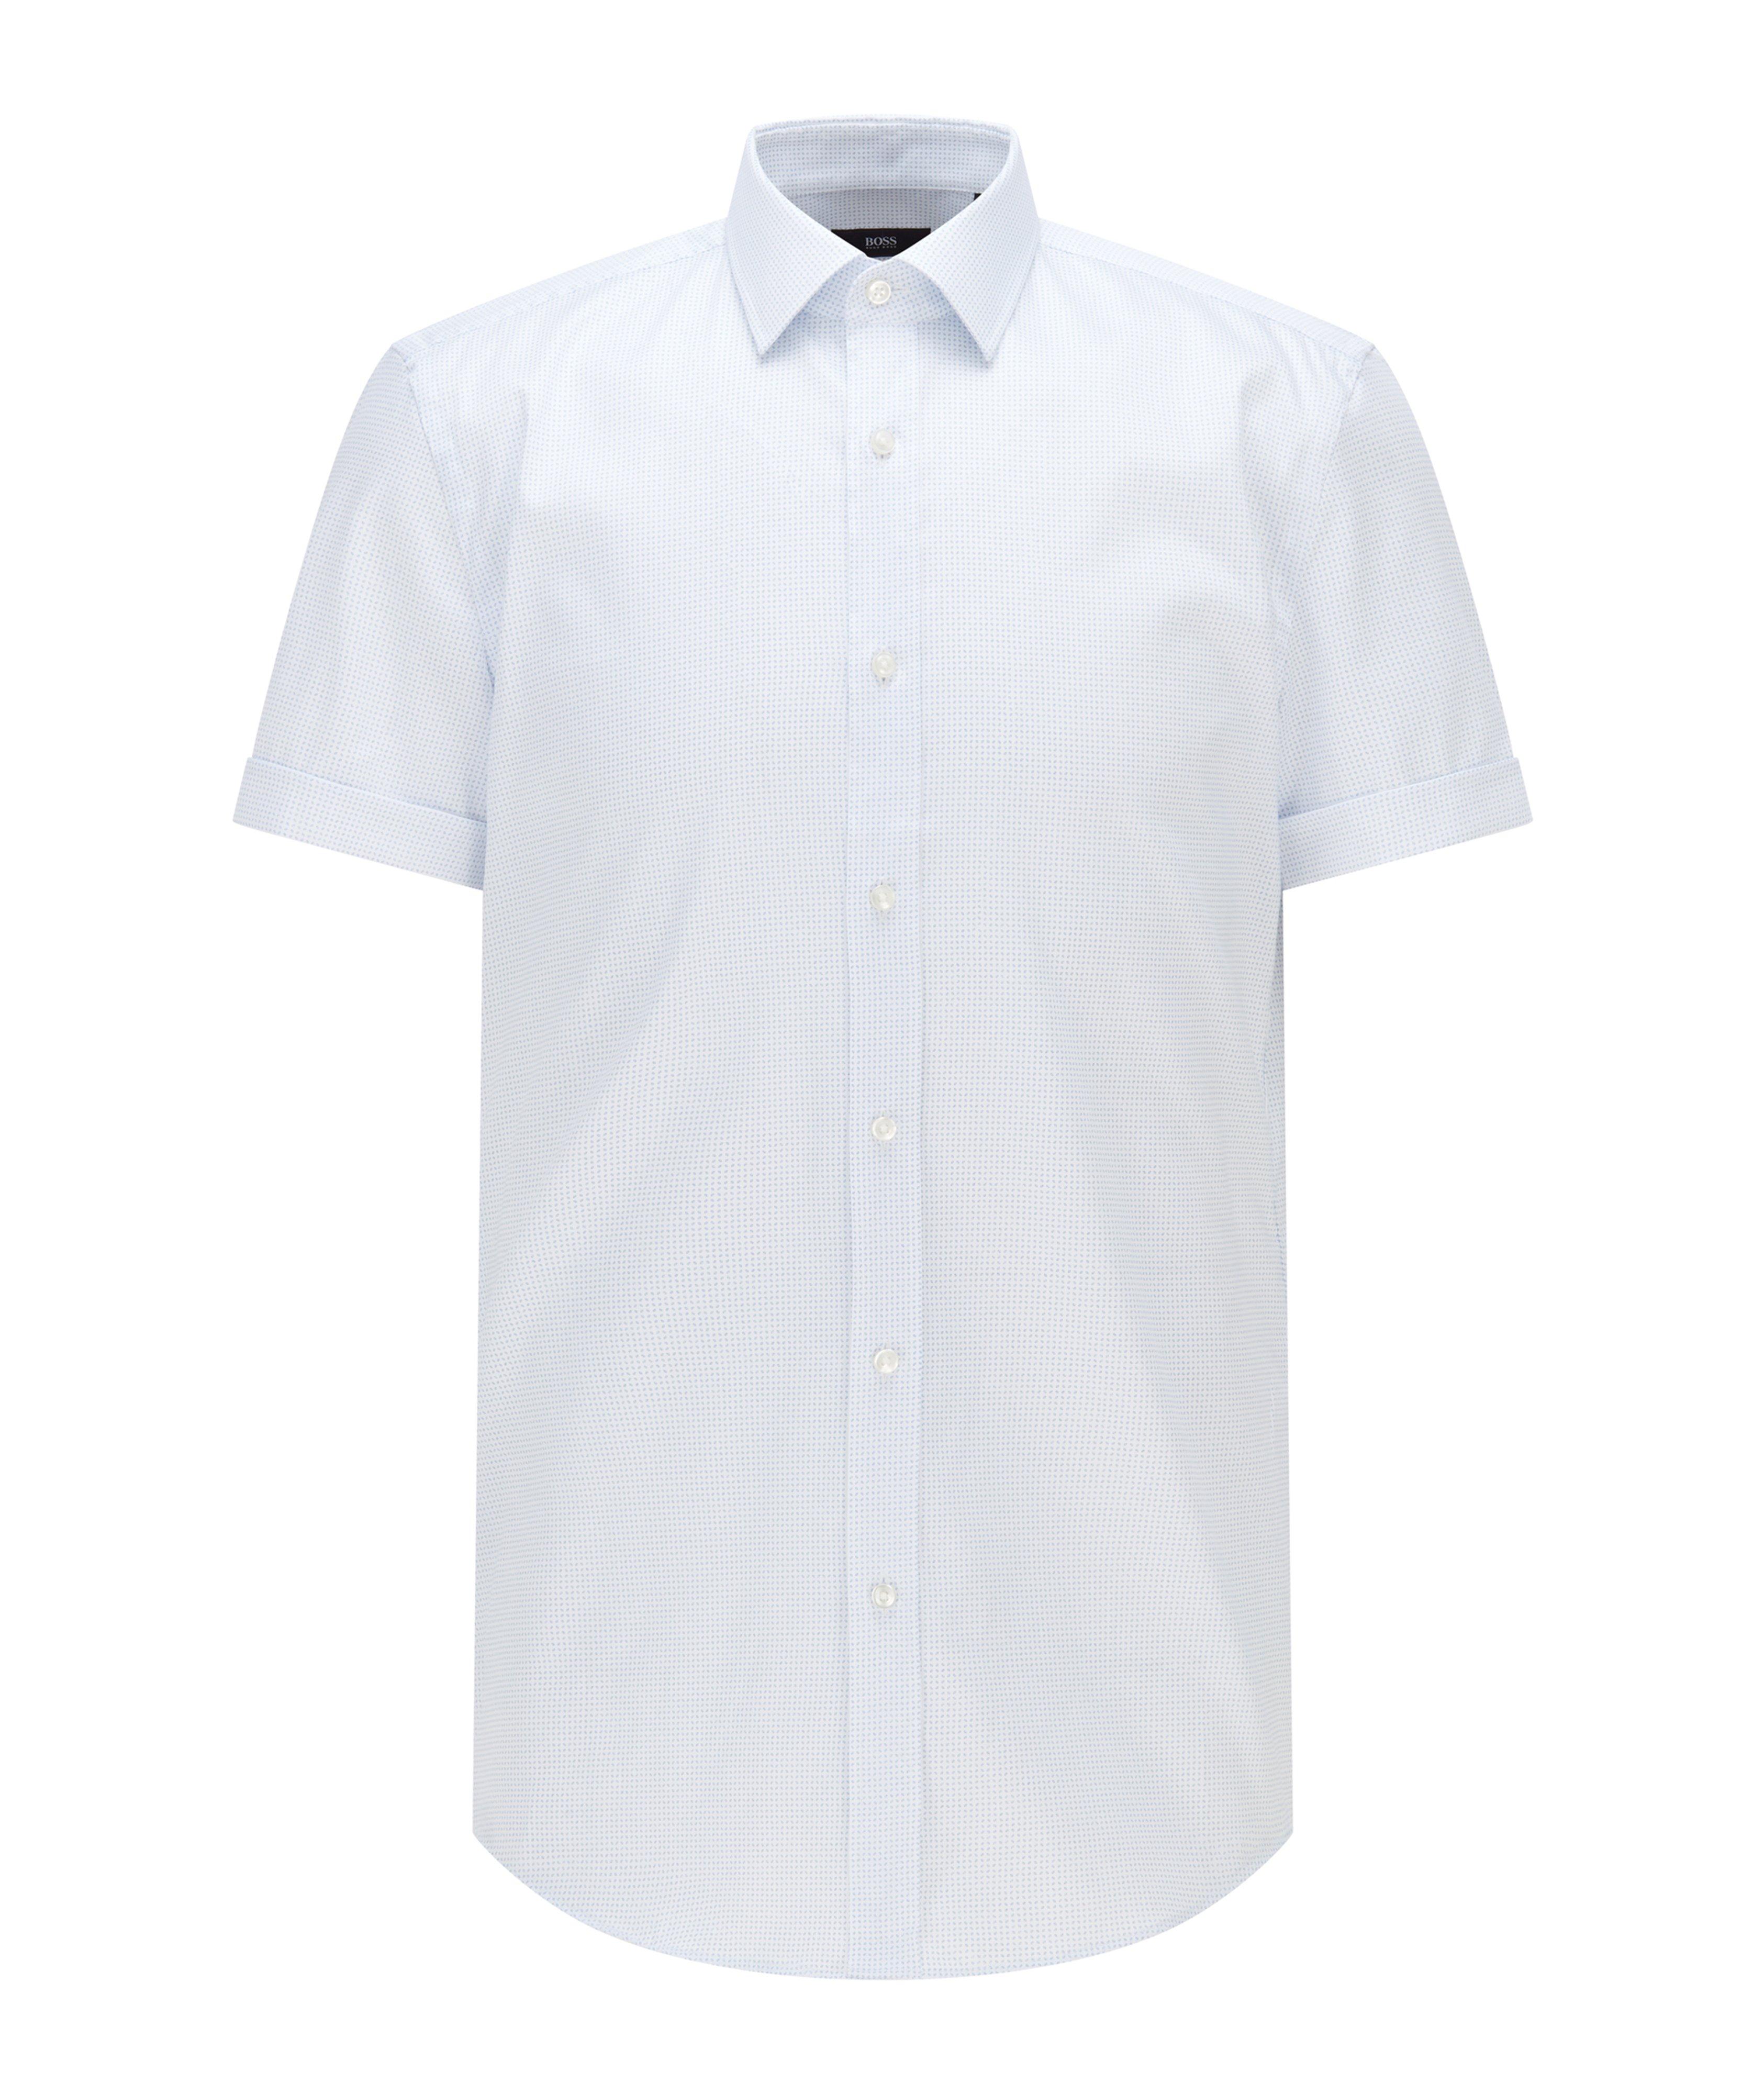 Short-Sleeve Printed Cotton Shirt image 0